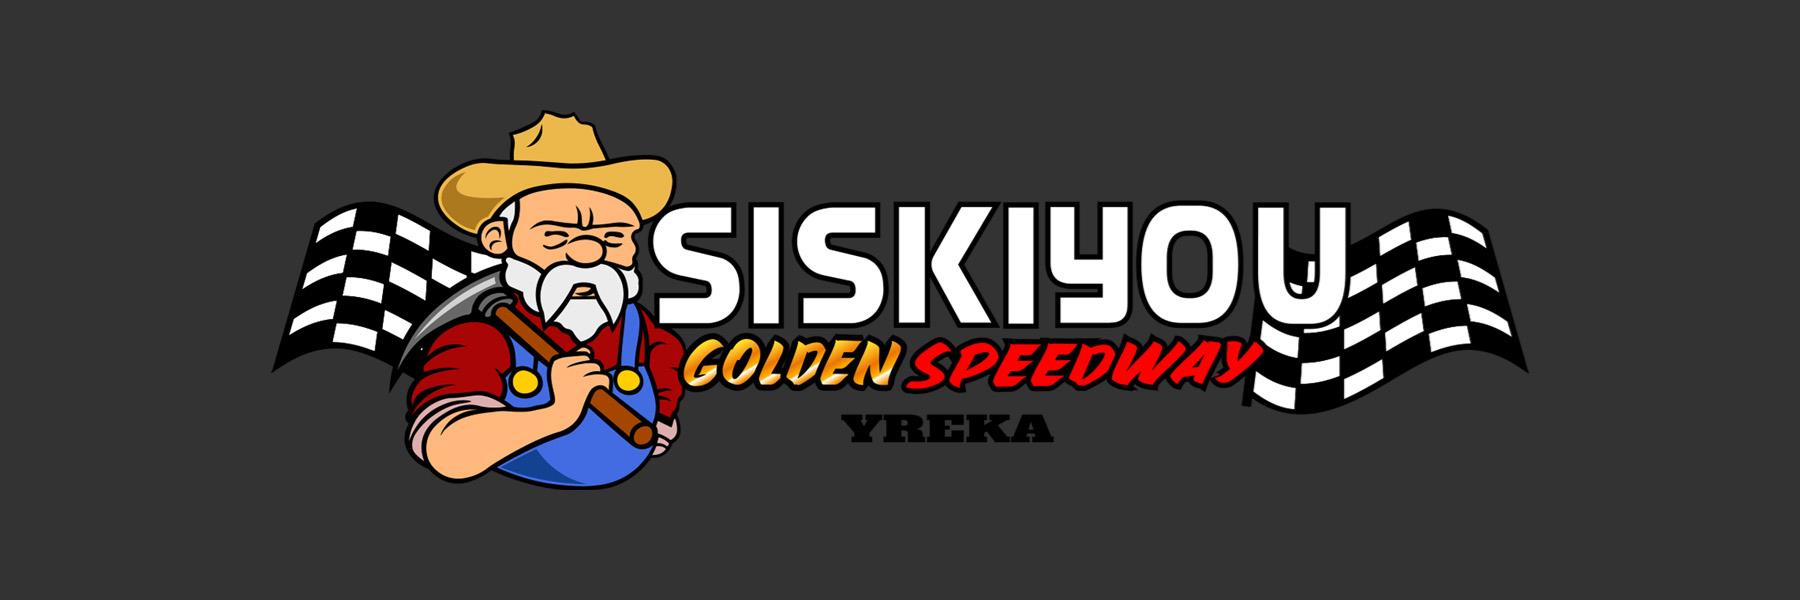 4/29/2022 - Siskiyou Golden Speedway